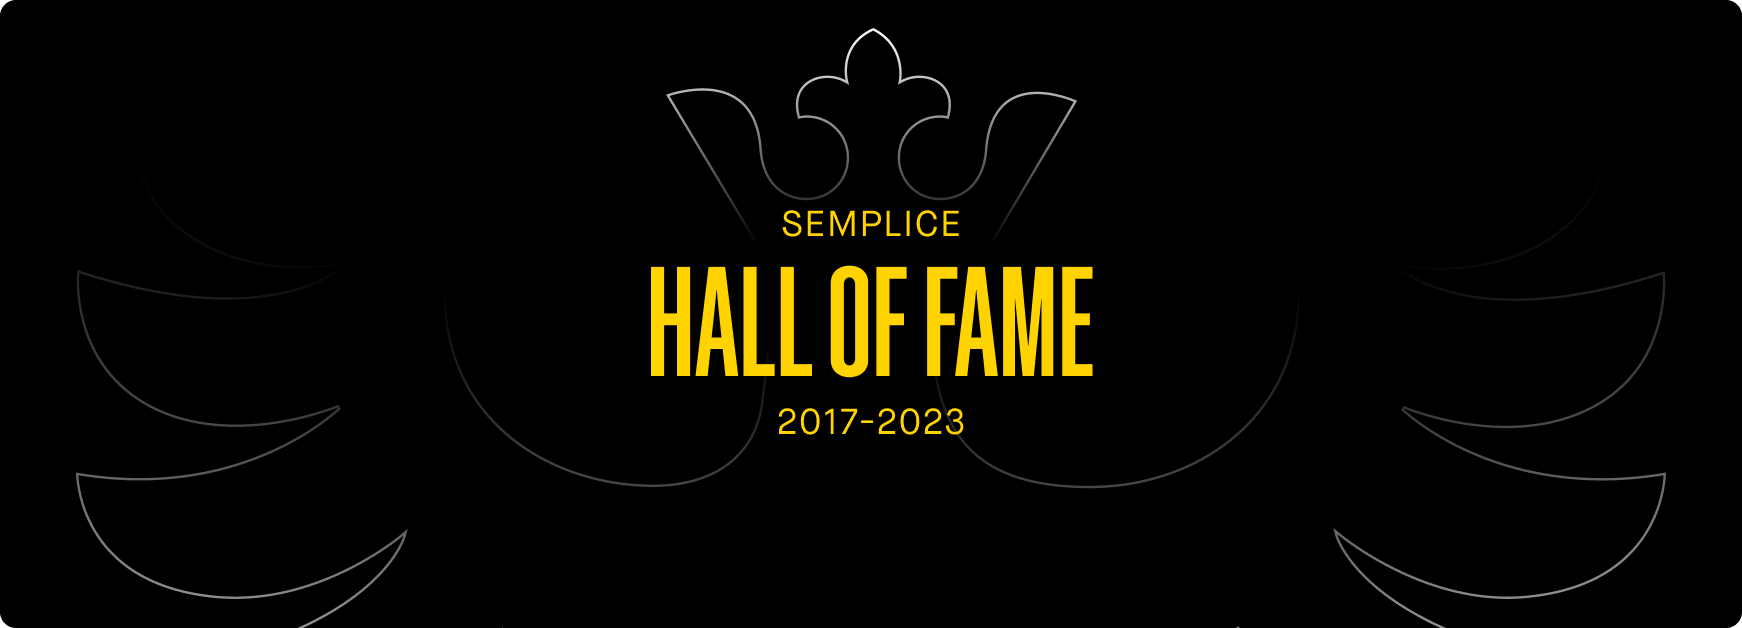 Semplice-HallofFame-Banner